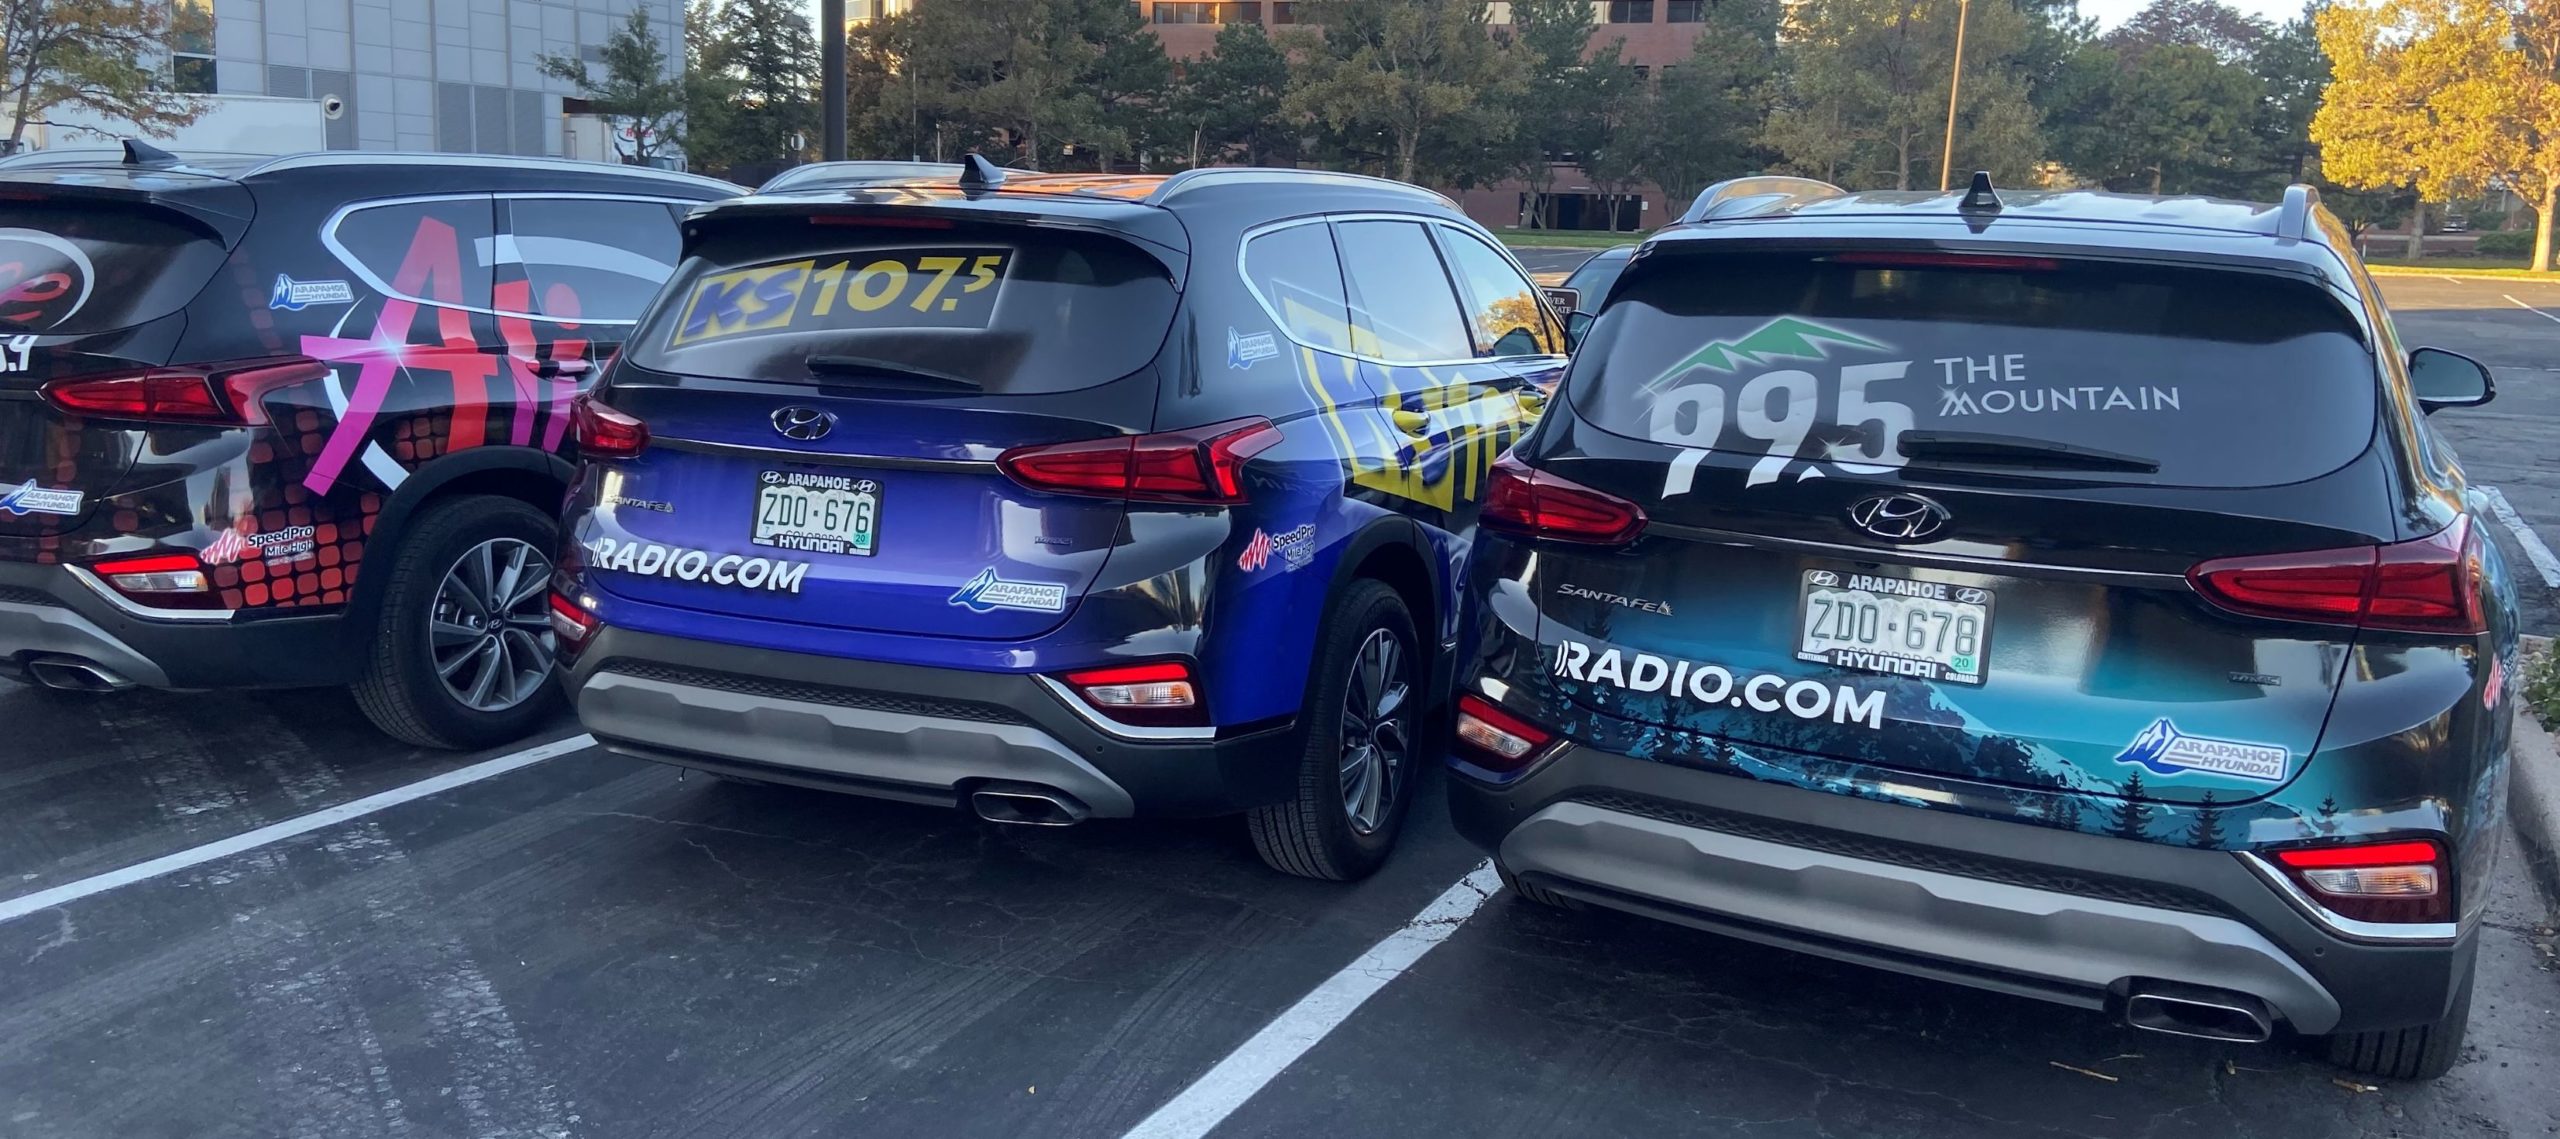 Radio.com fleet wrap